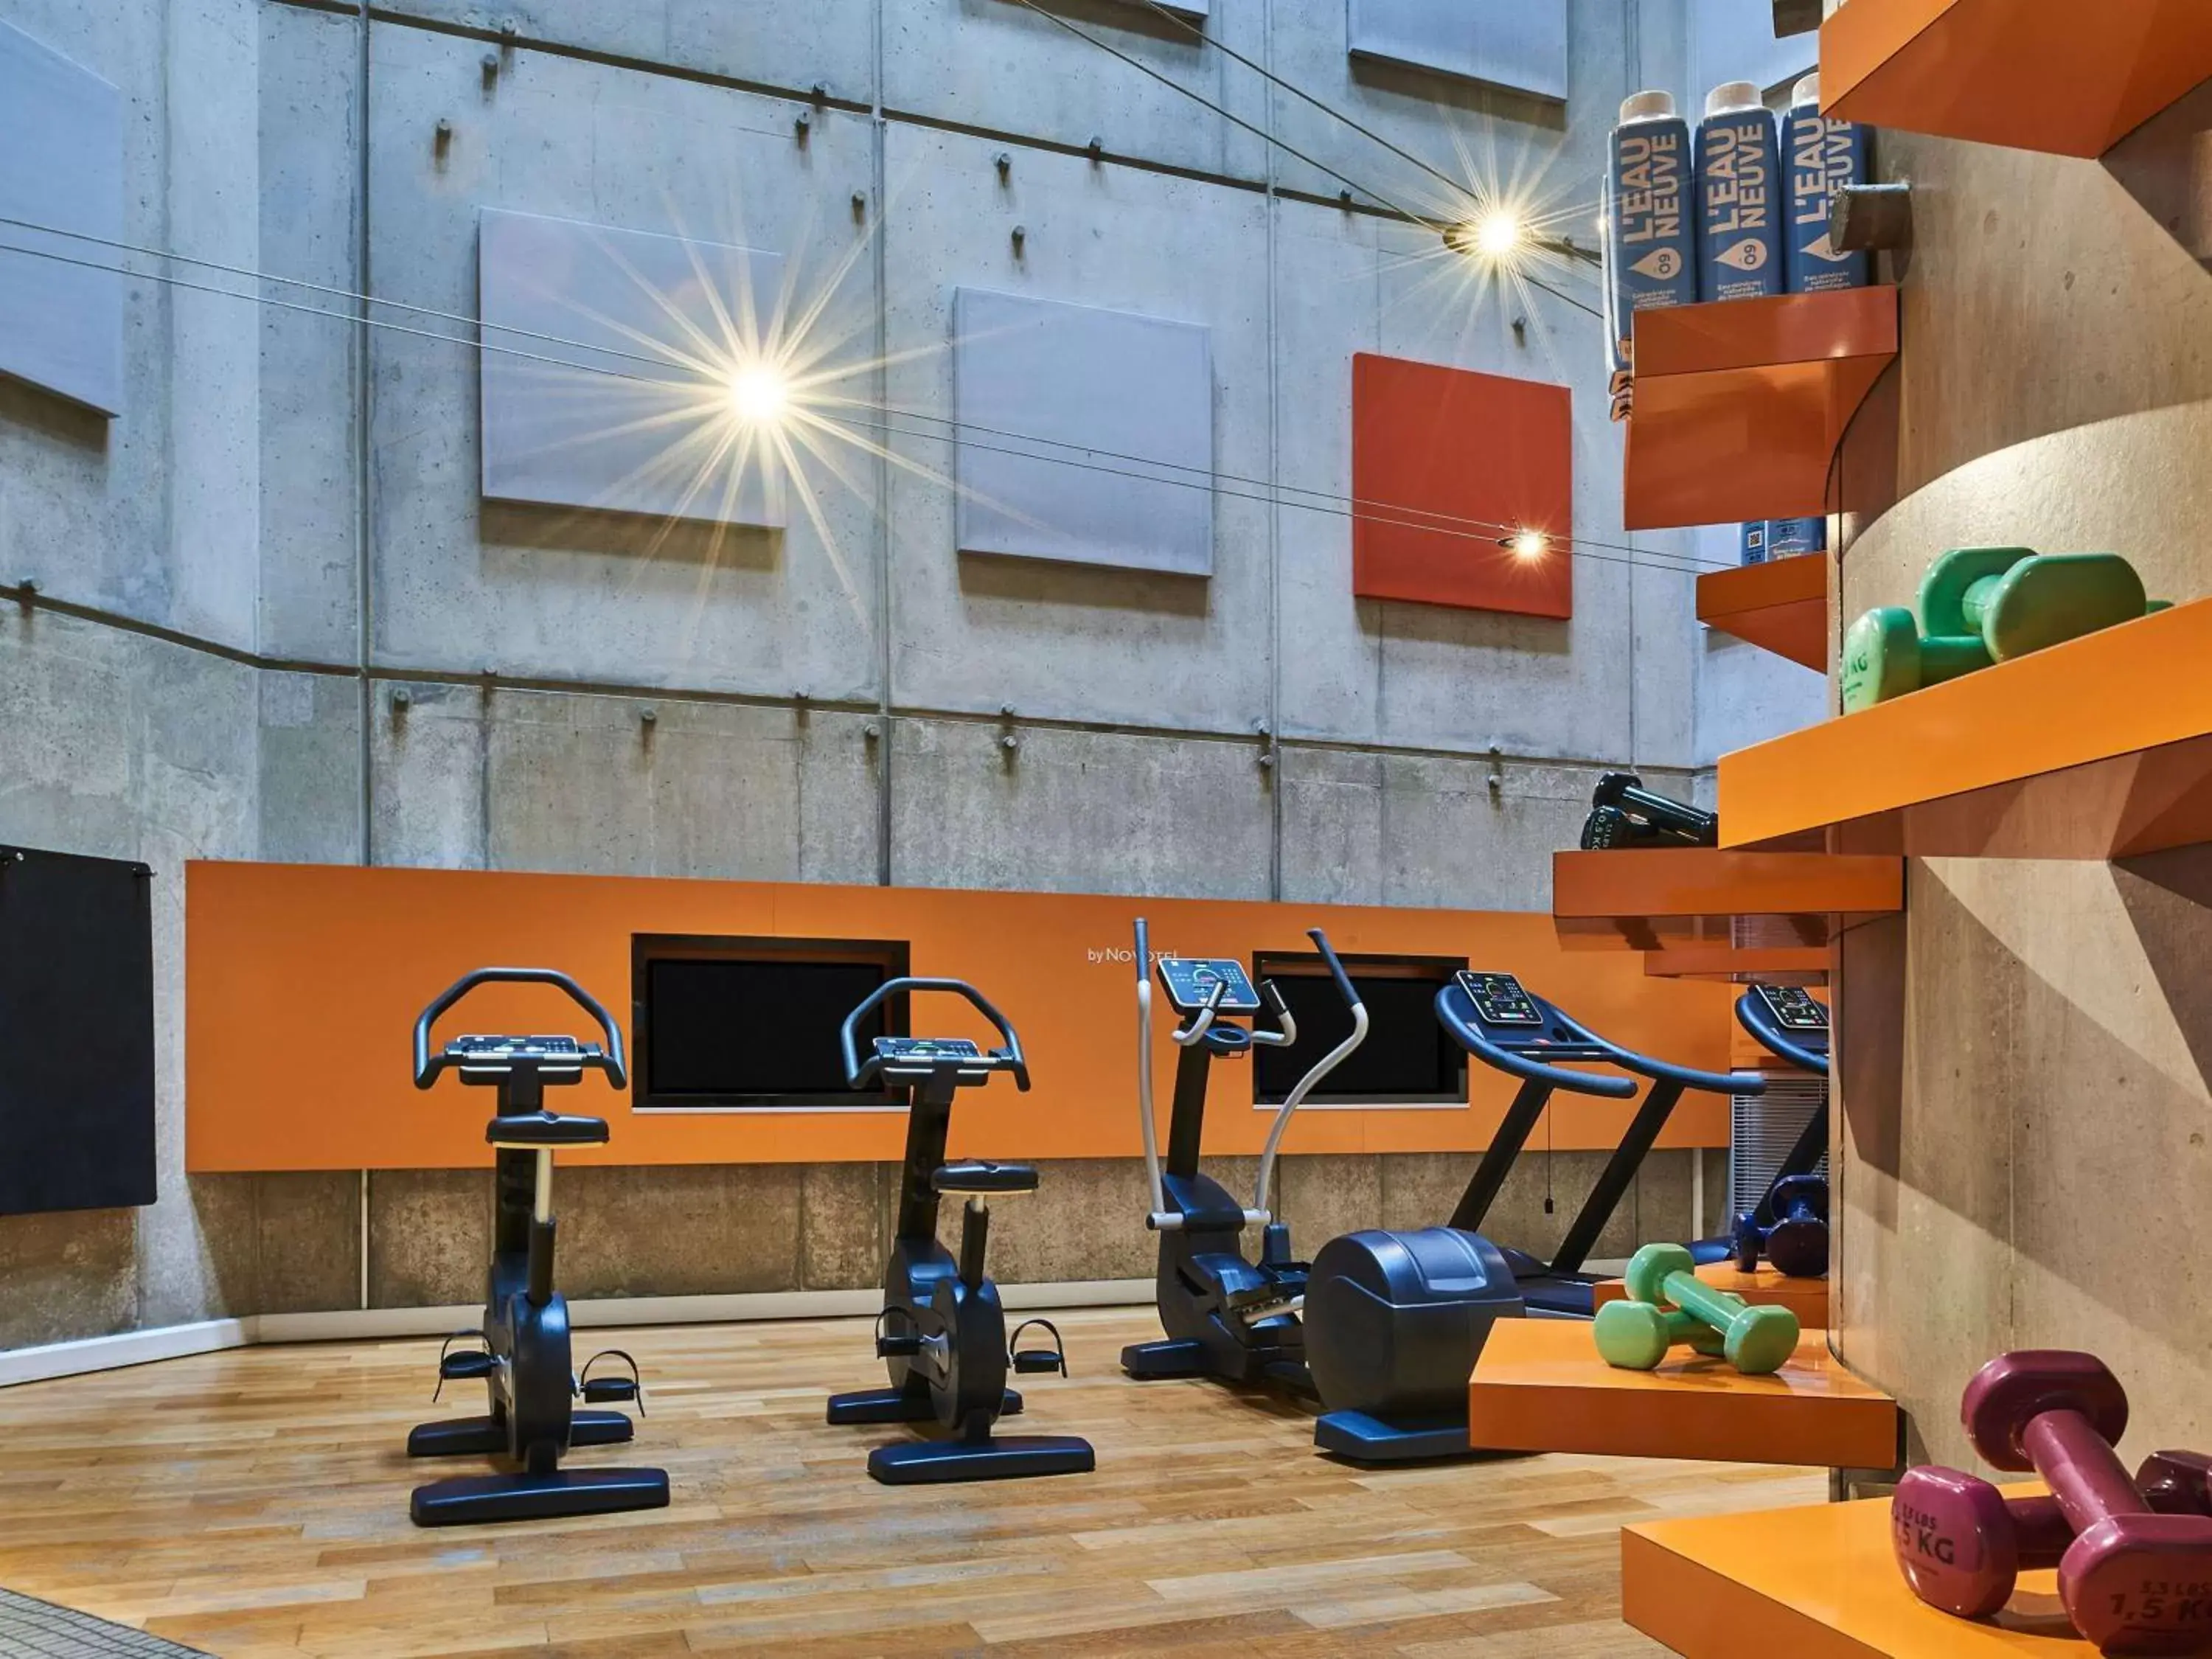 Fitness centre/facilities, Fitness Center/Facilities in Novotel Paris Gare De Lyon